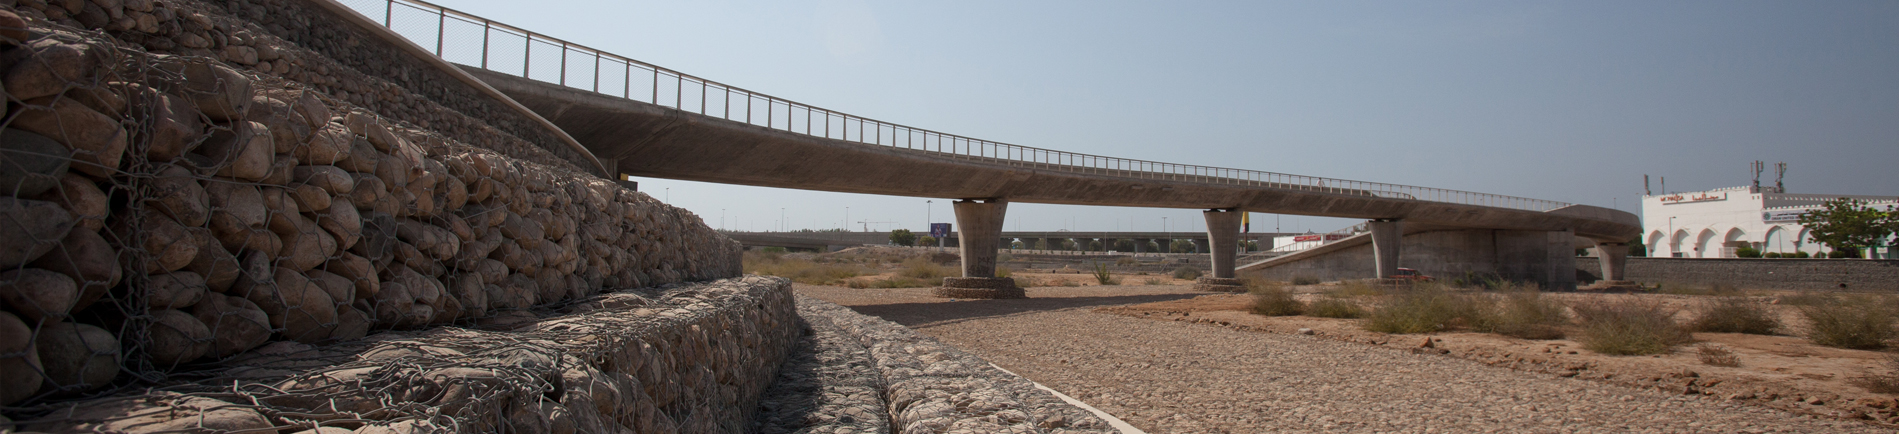 Design and Construction of Wadi Bridges and Culverts in Al Qurm